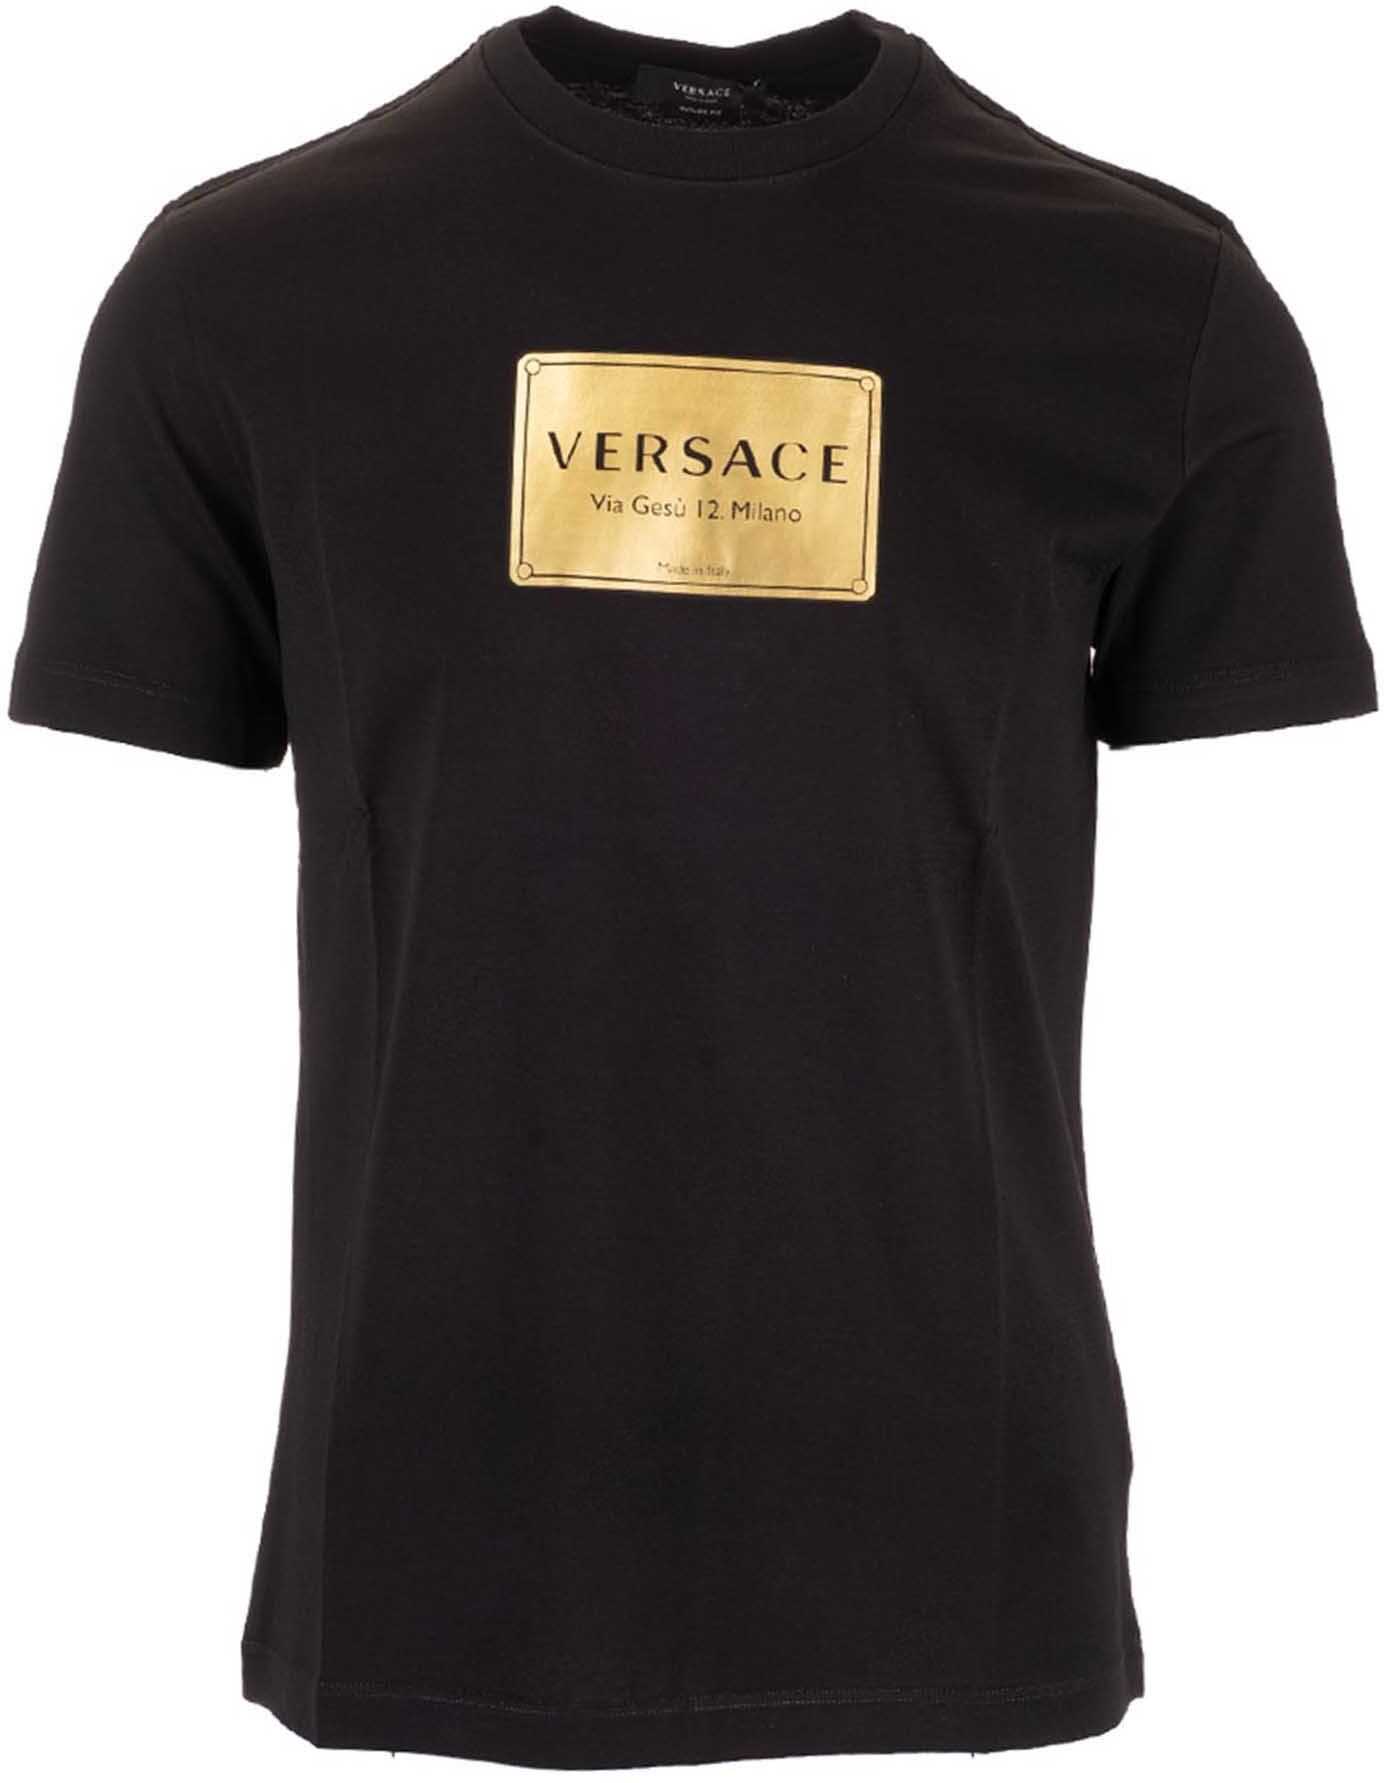 Versace Black T-Shirt With Gold Logo Black